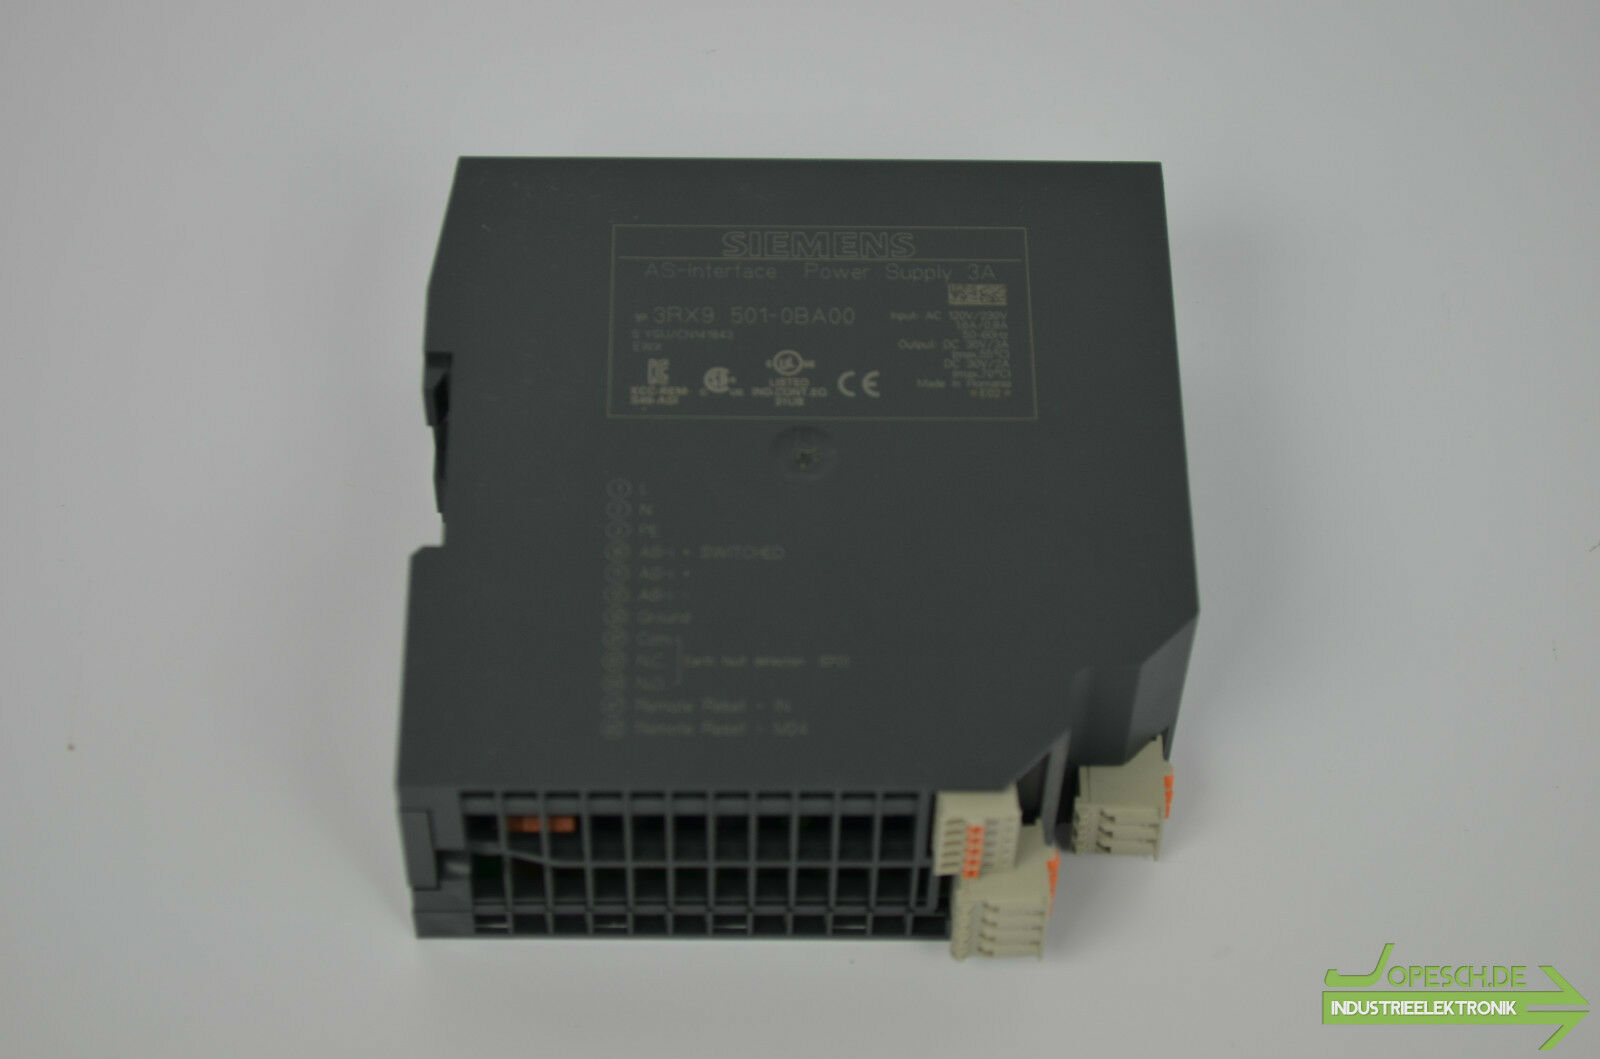 Siemens AS-Interface Power Supply 3A 3RX9 501-0BA00 ( 3RX9501-0BA00 )